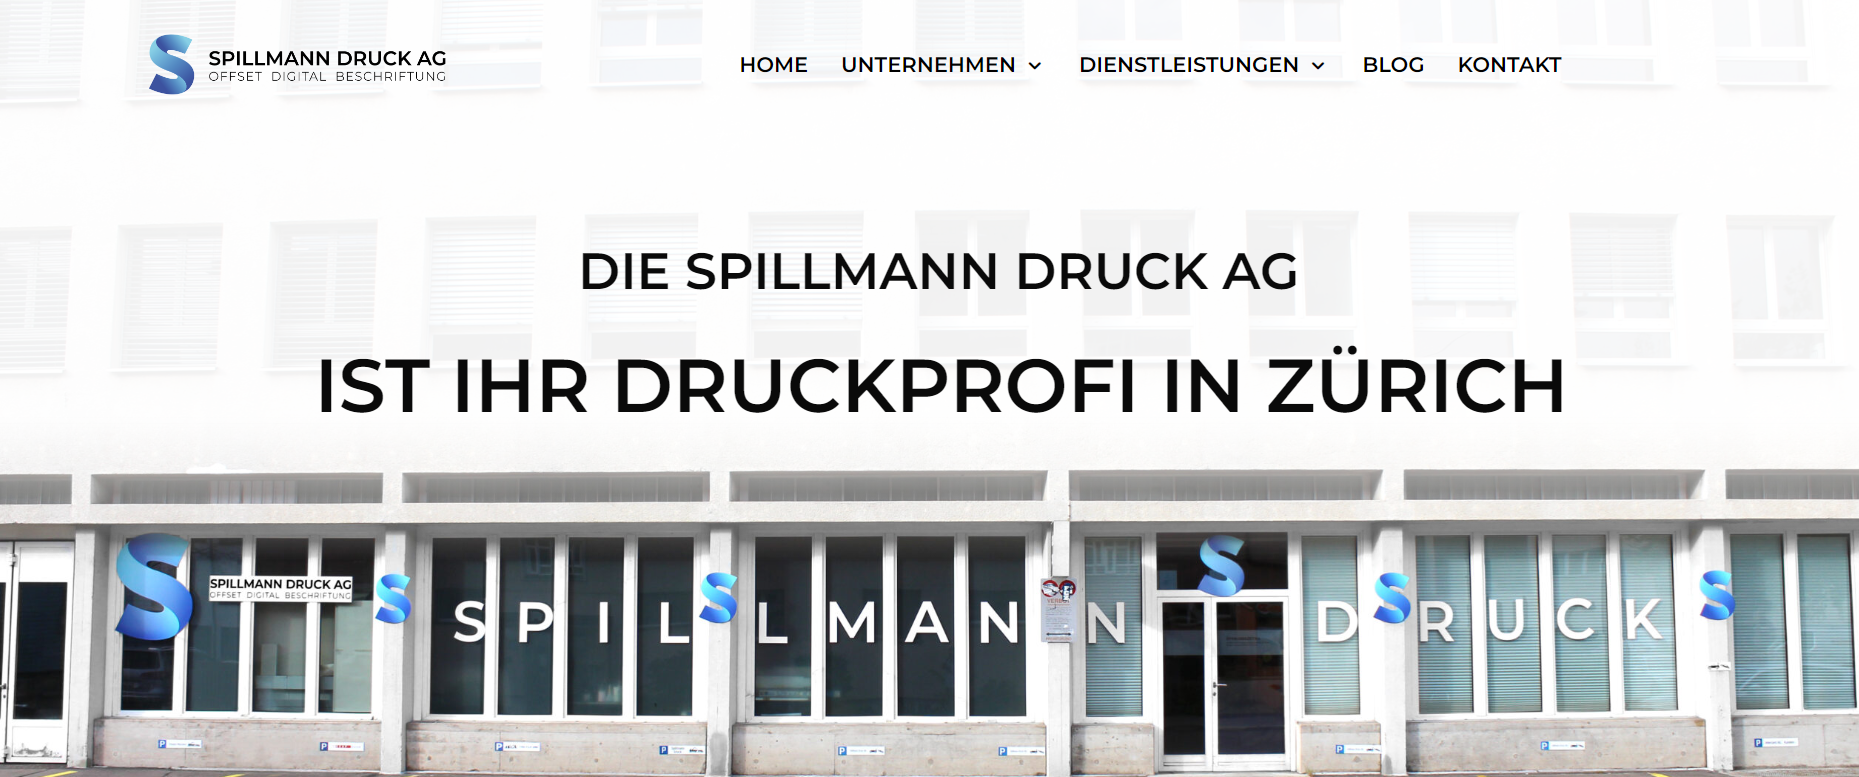 Spillmann Druck AG